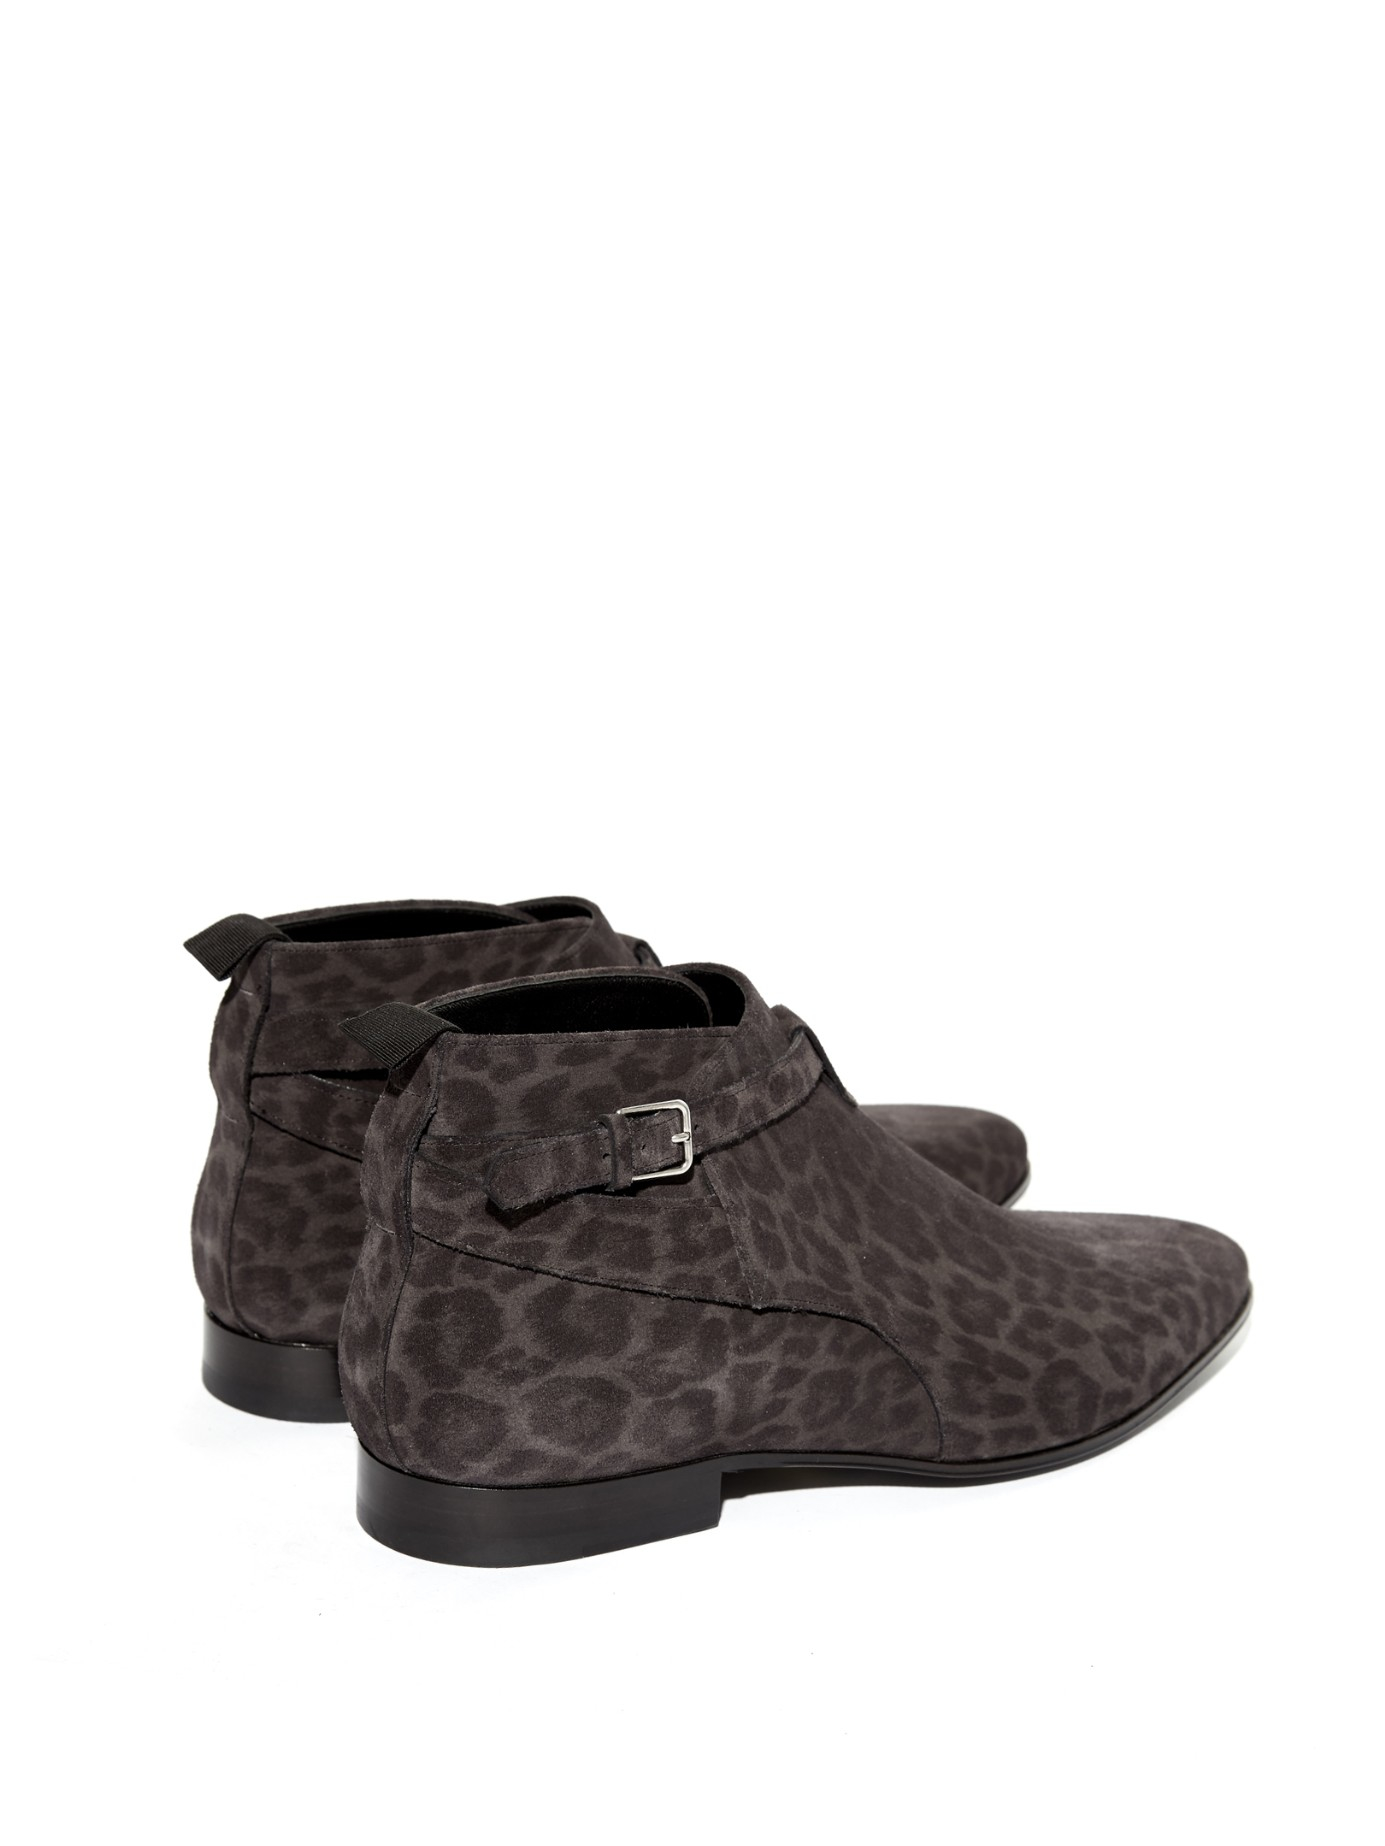 Saint Laurent Leopard-Print Suede Ankle Boots in Gray for Men | Lyst